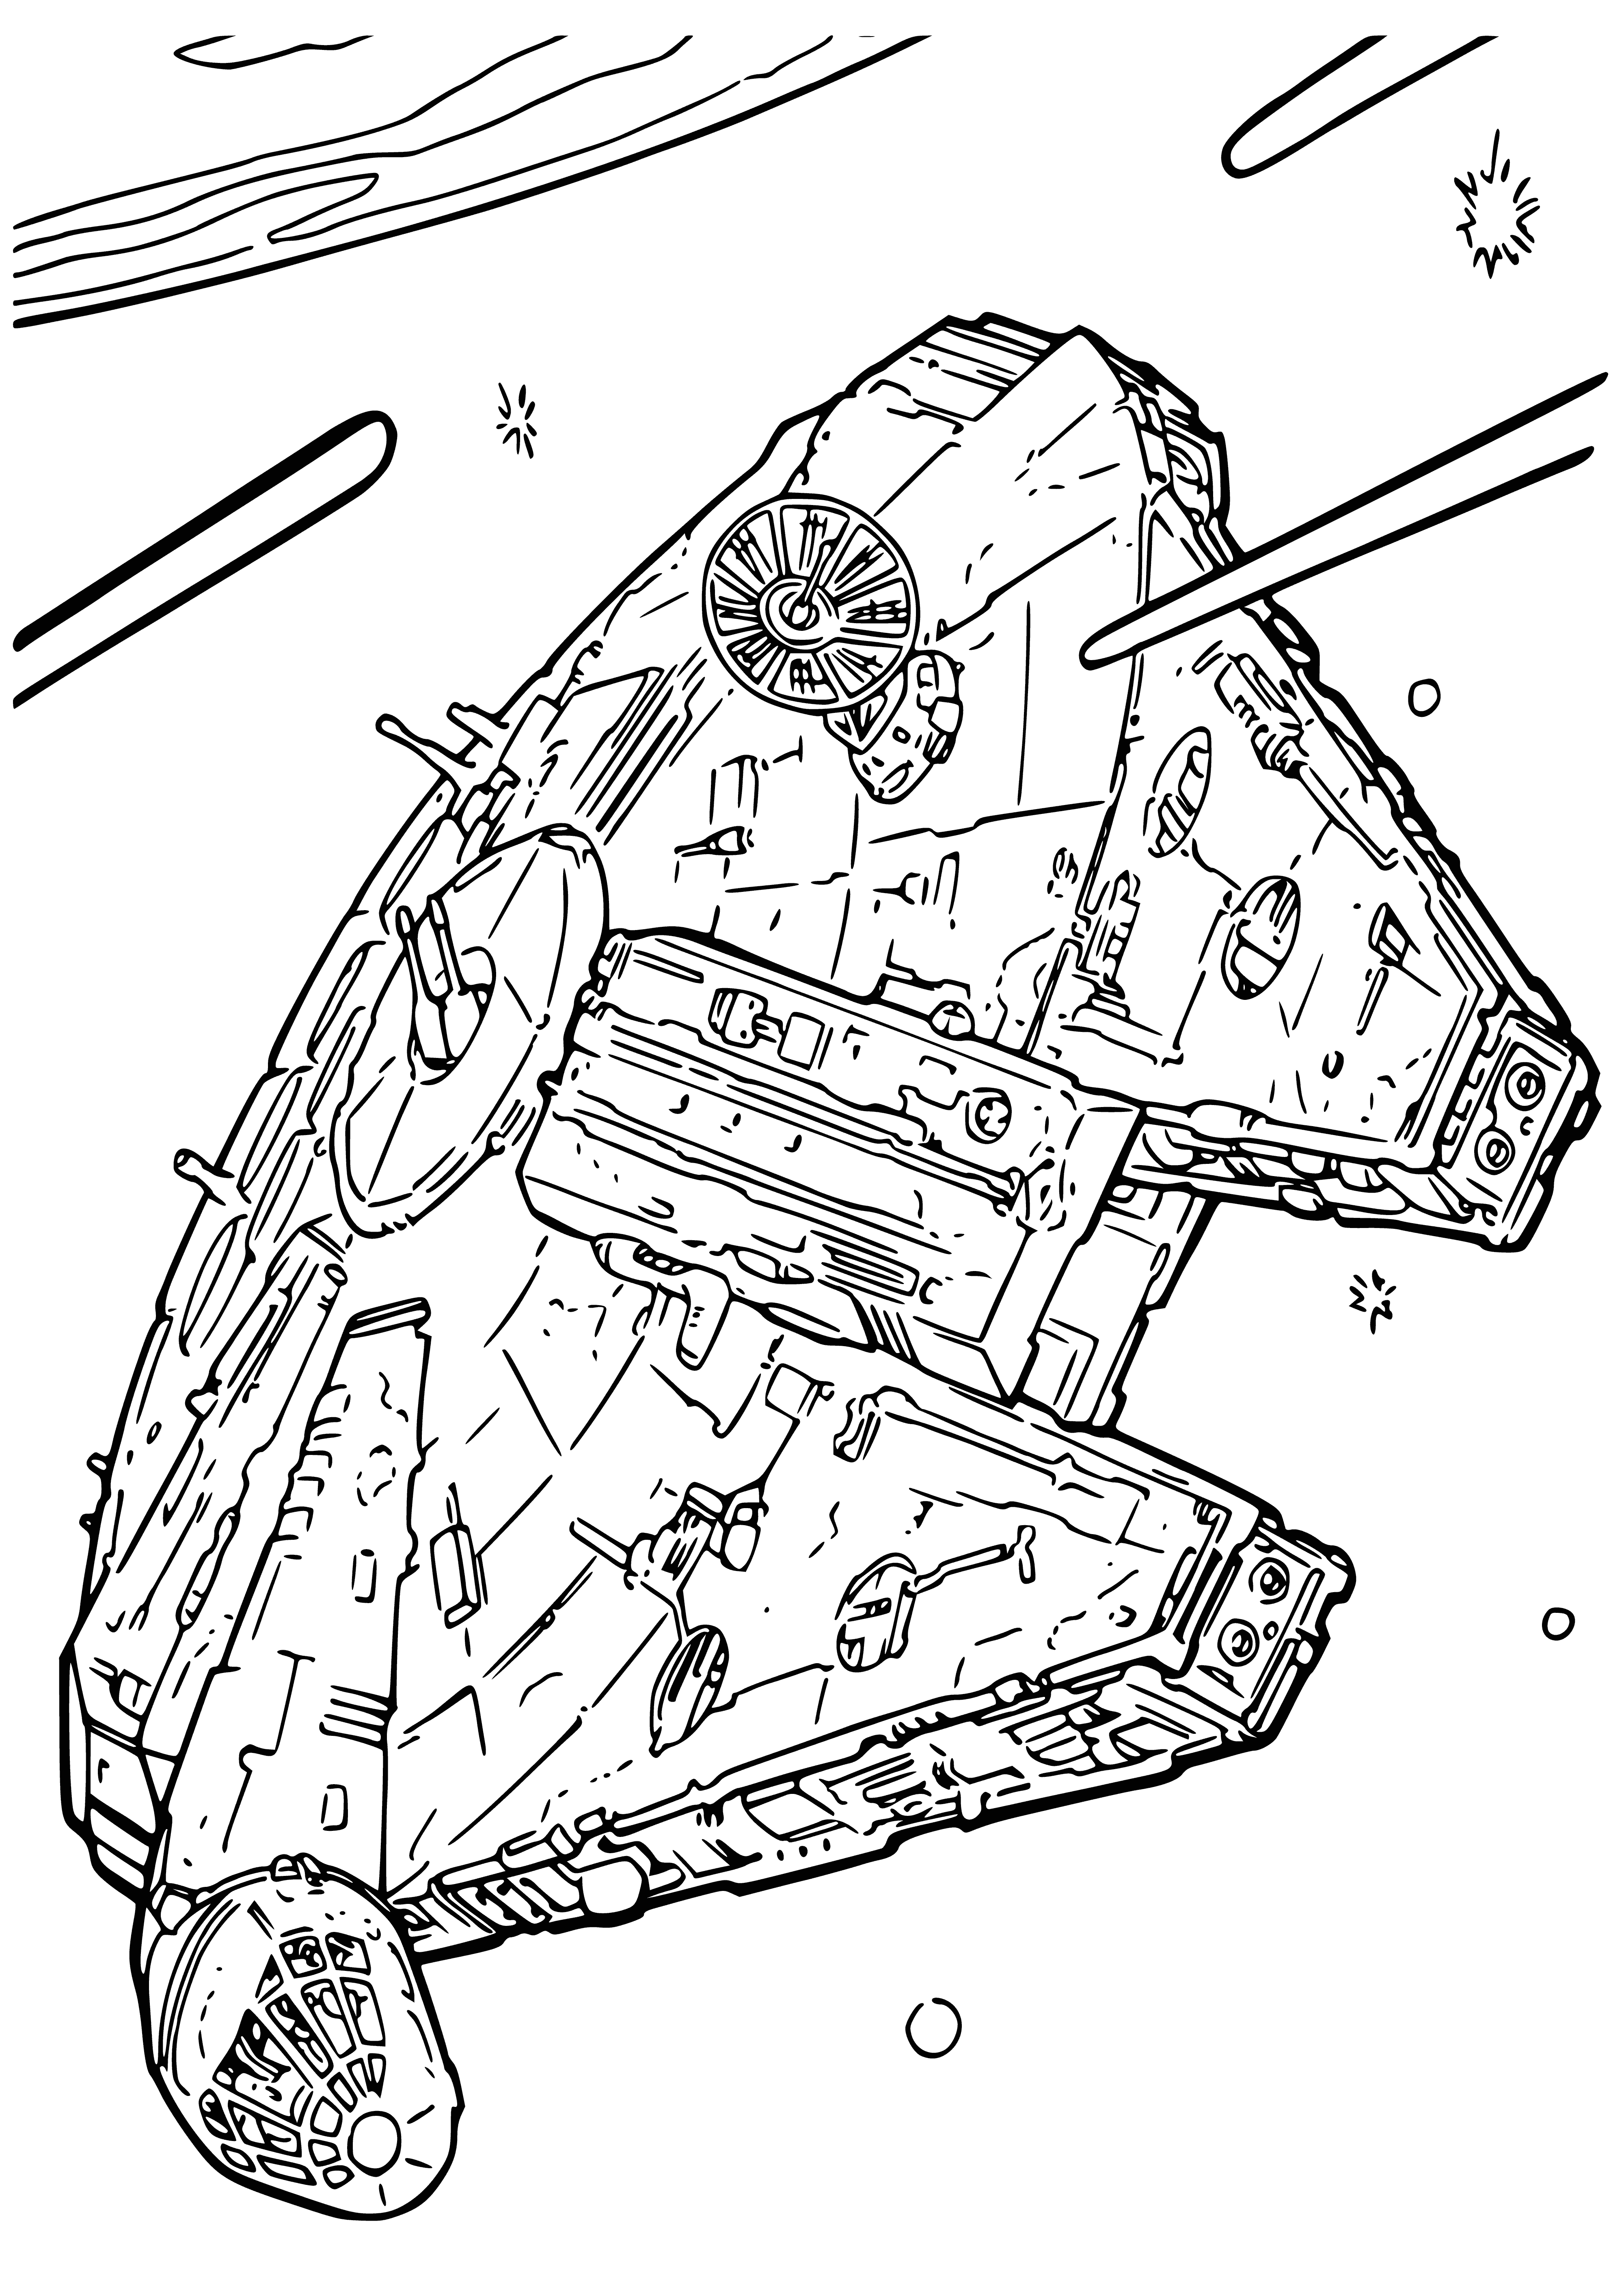 Han Solo's ship Millennium Falcon coloring page